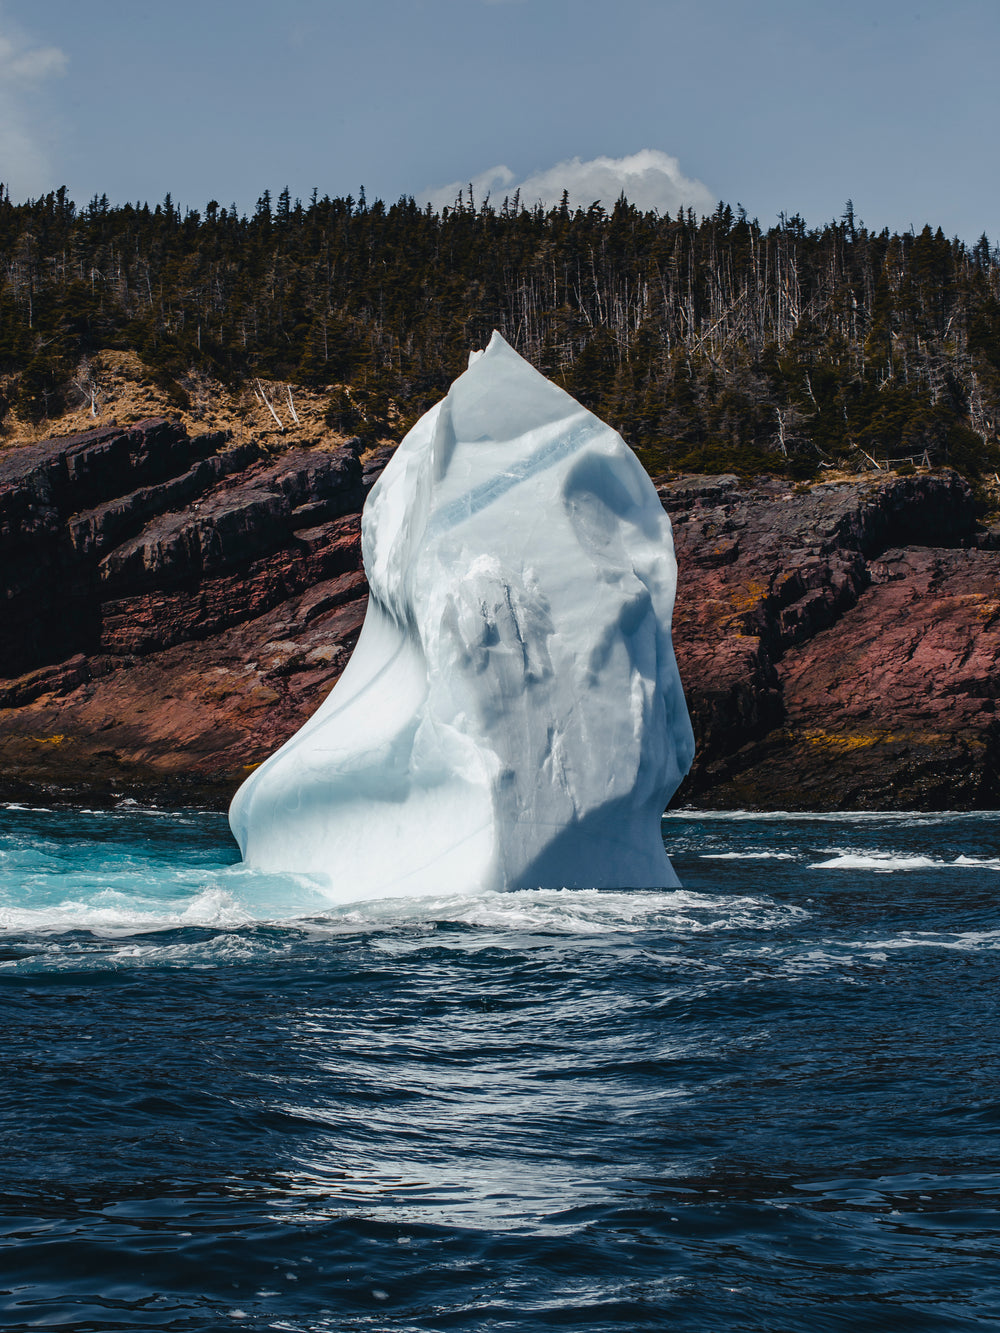 statueque glacier on the water